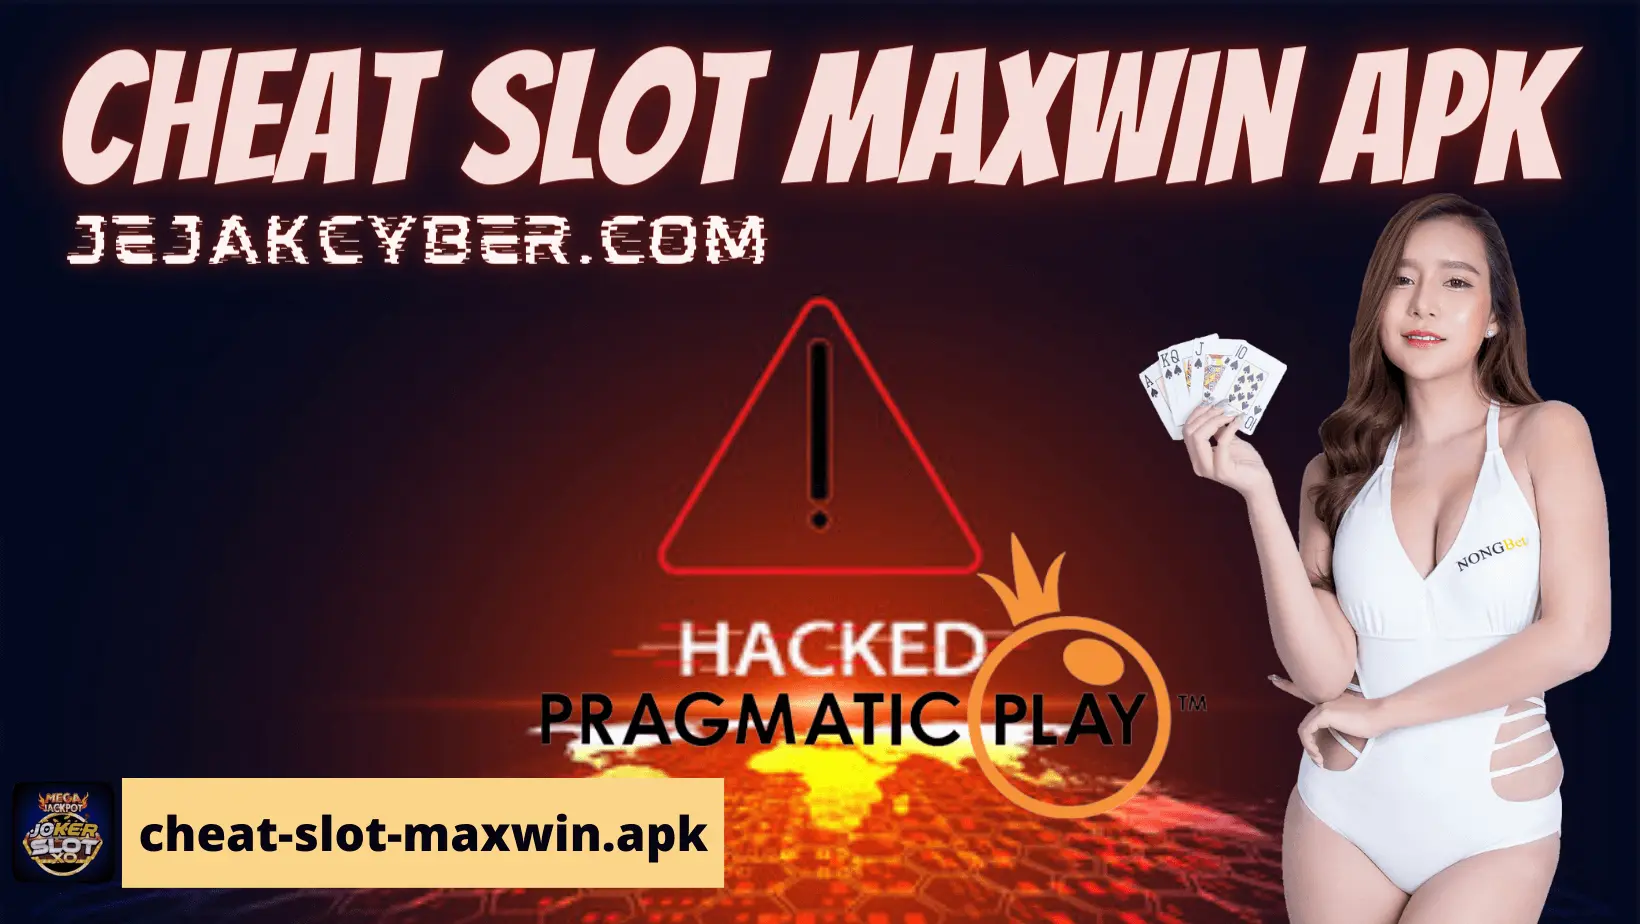 Cheat slot maxwin